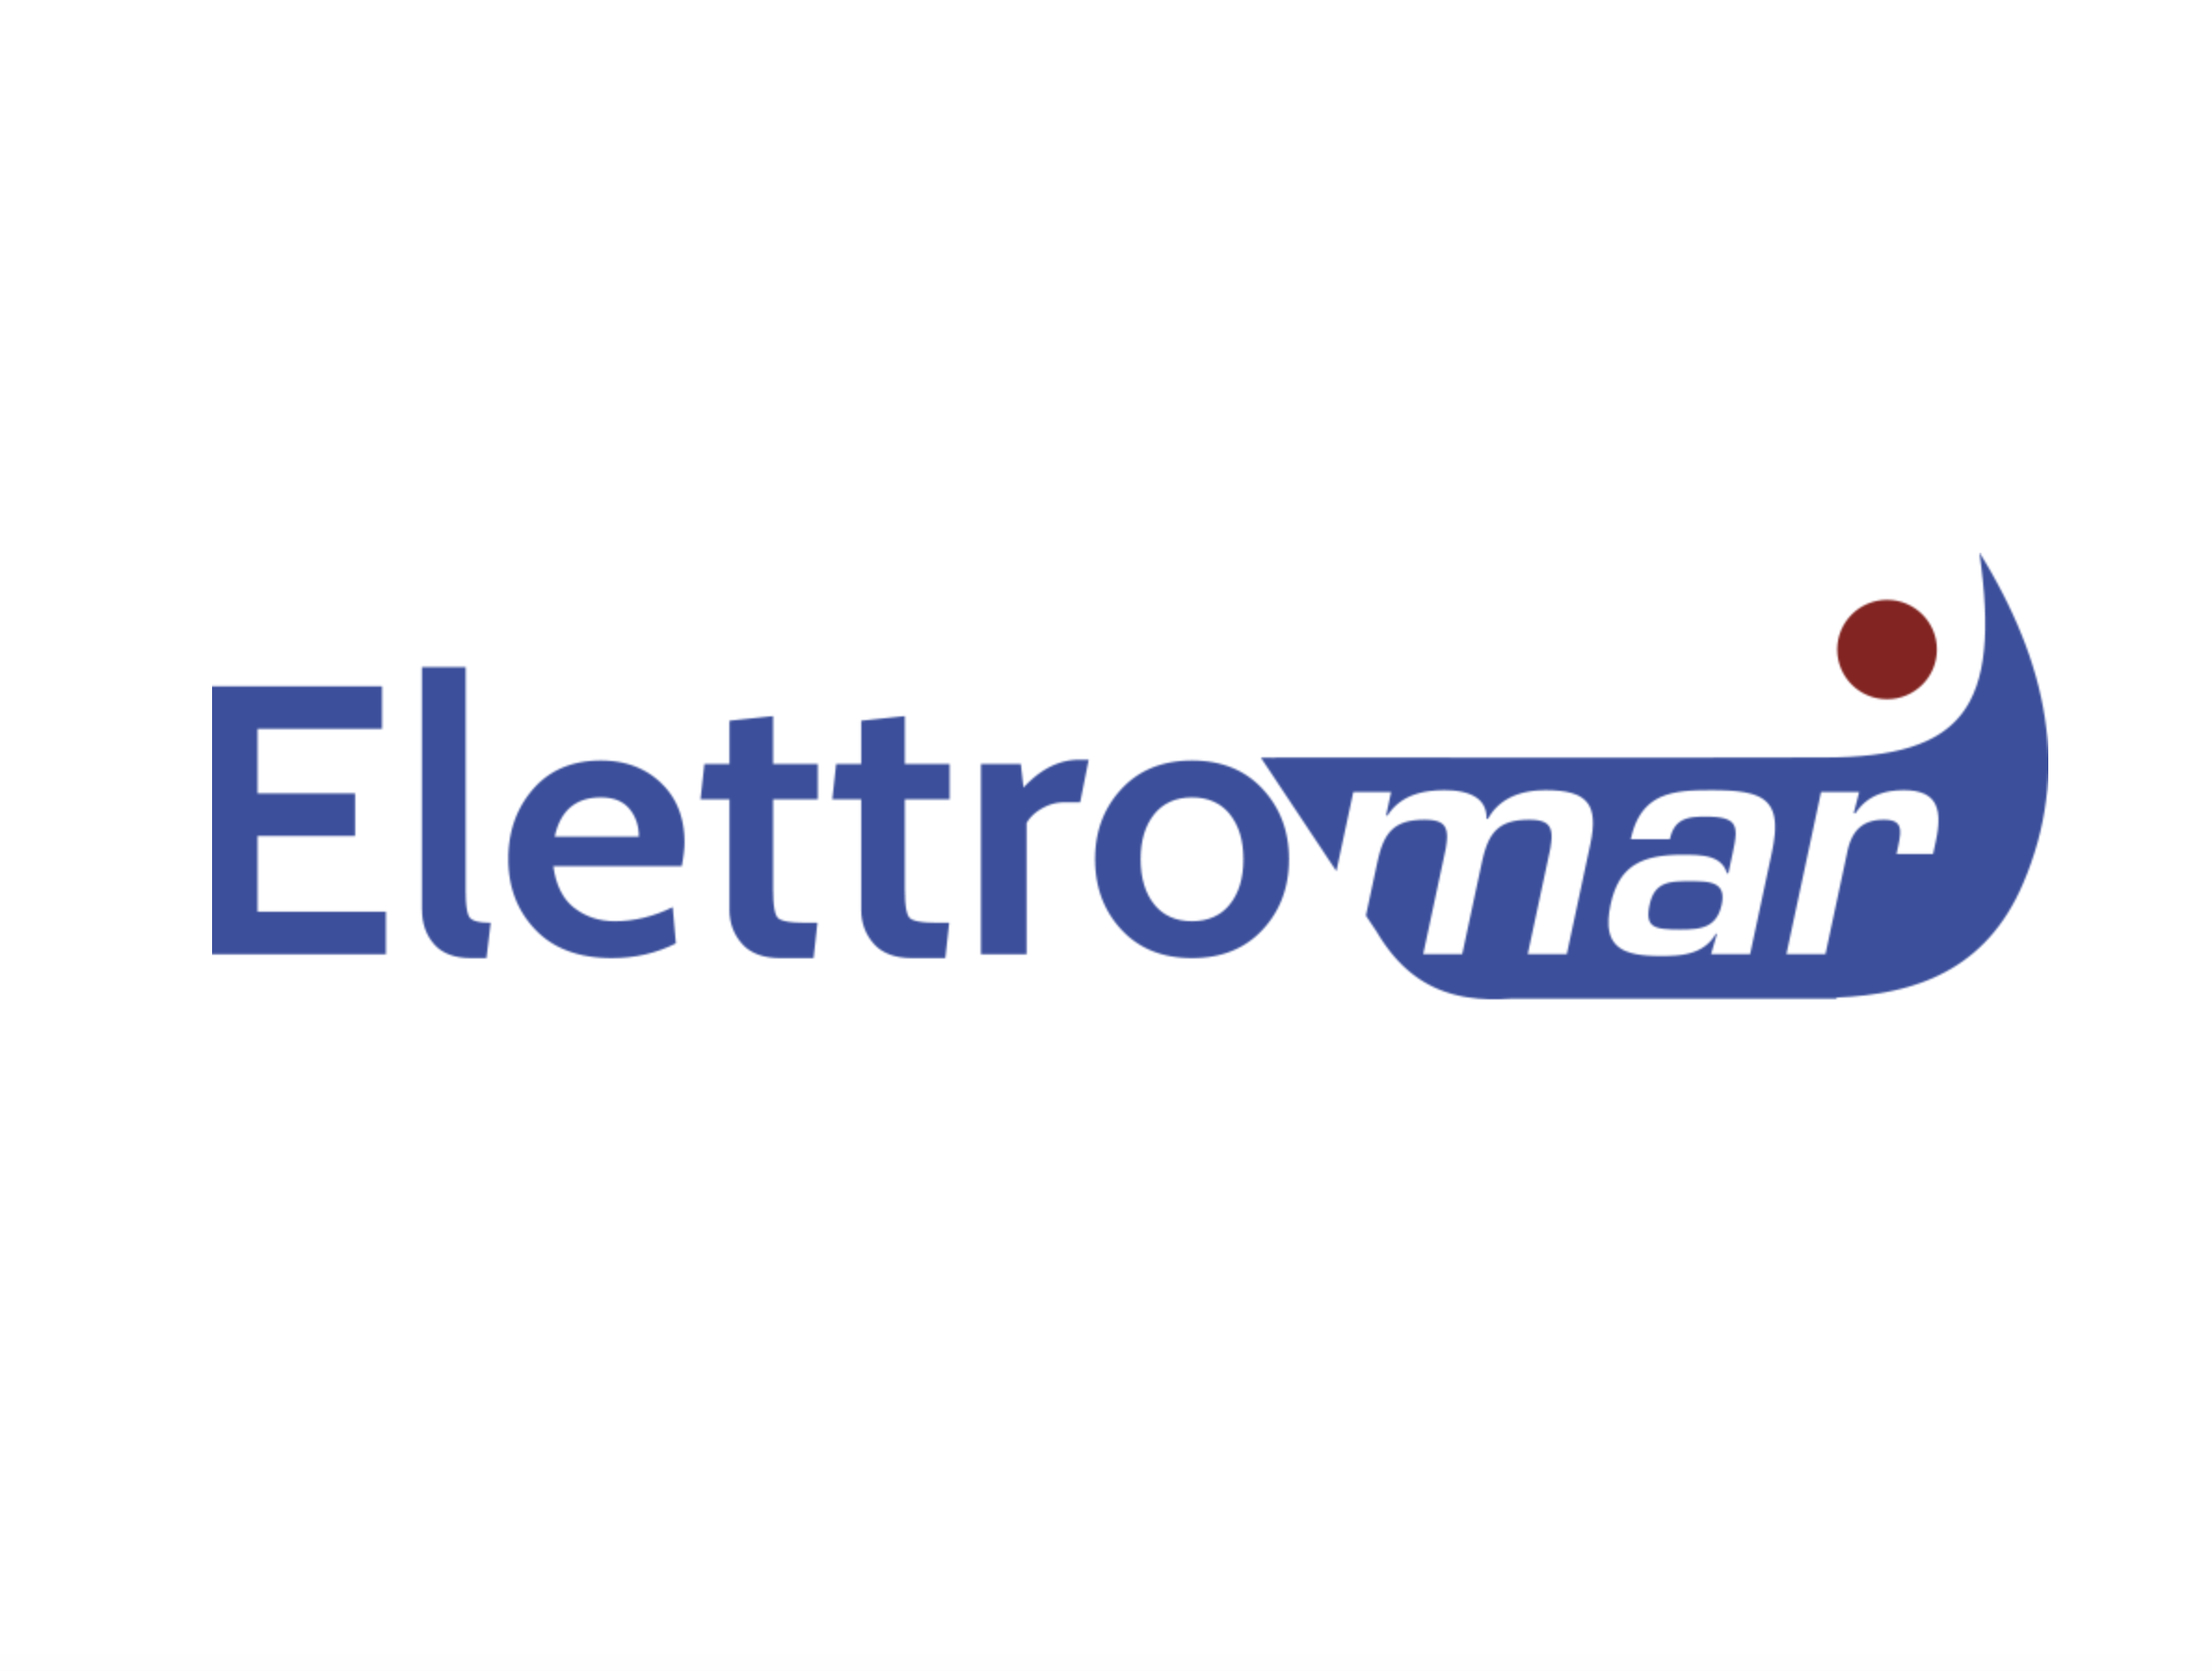 ELETTROMAR.COM S.R.L